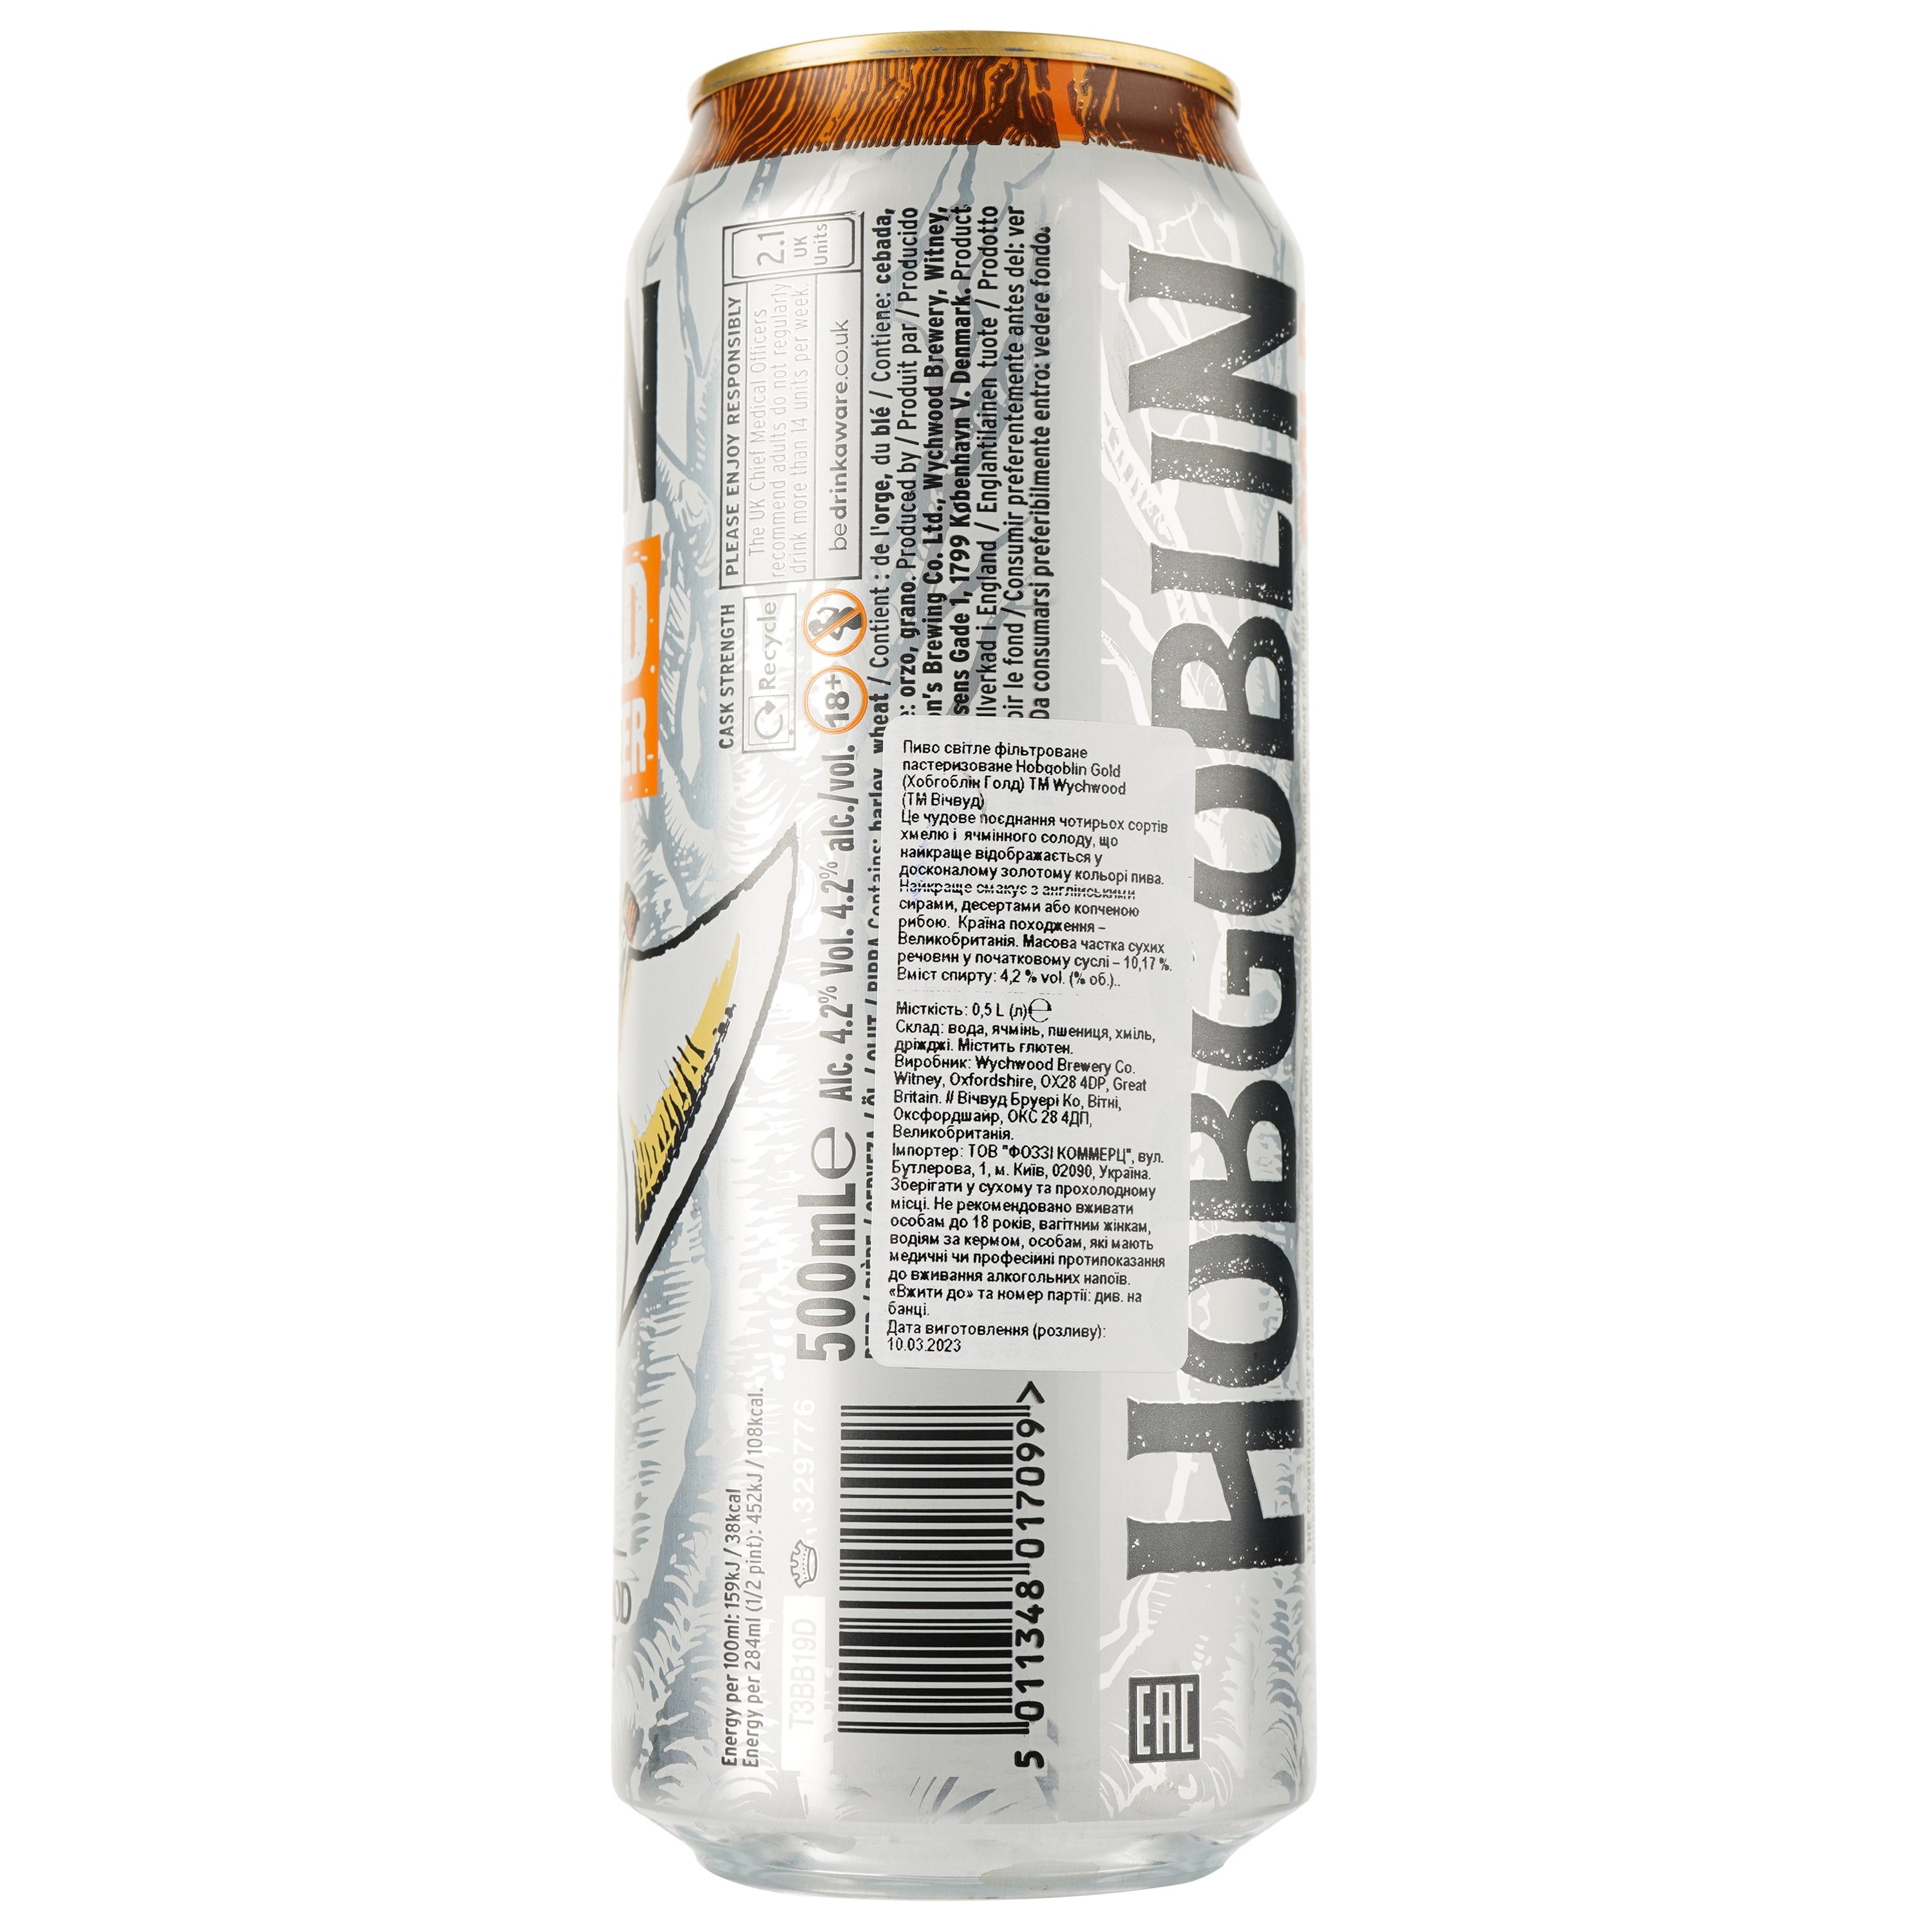 Пиво Wychwood Brewery Hobgoblin Gold світле 4.2% 0.5 л з/б - фото 2